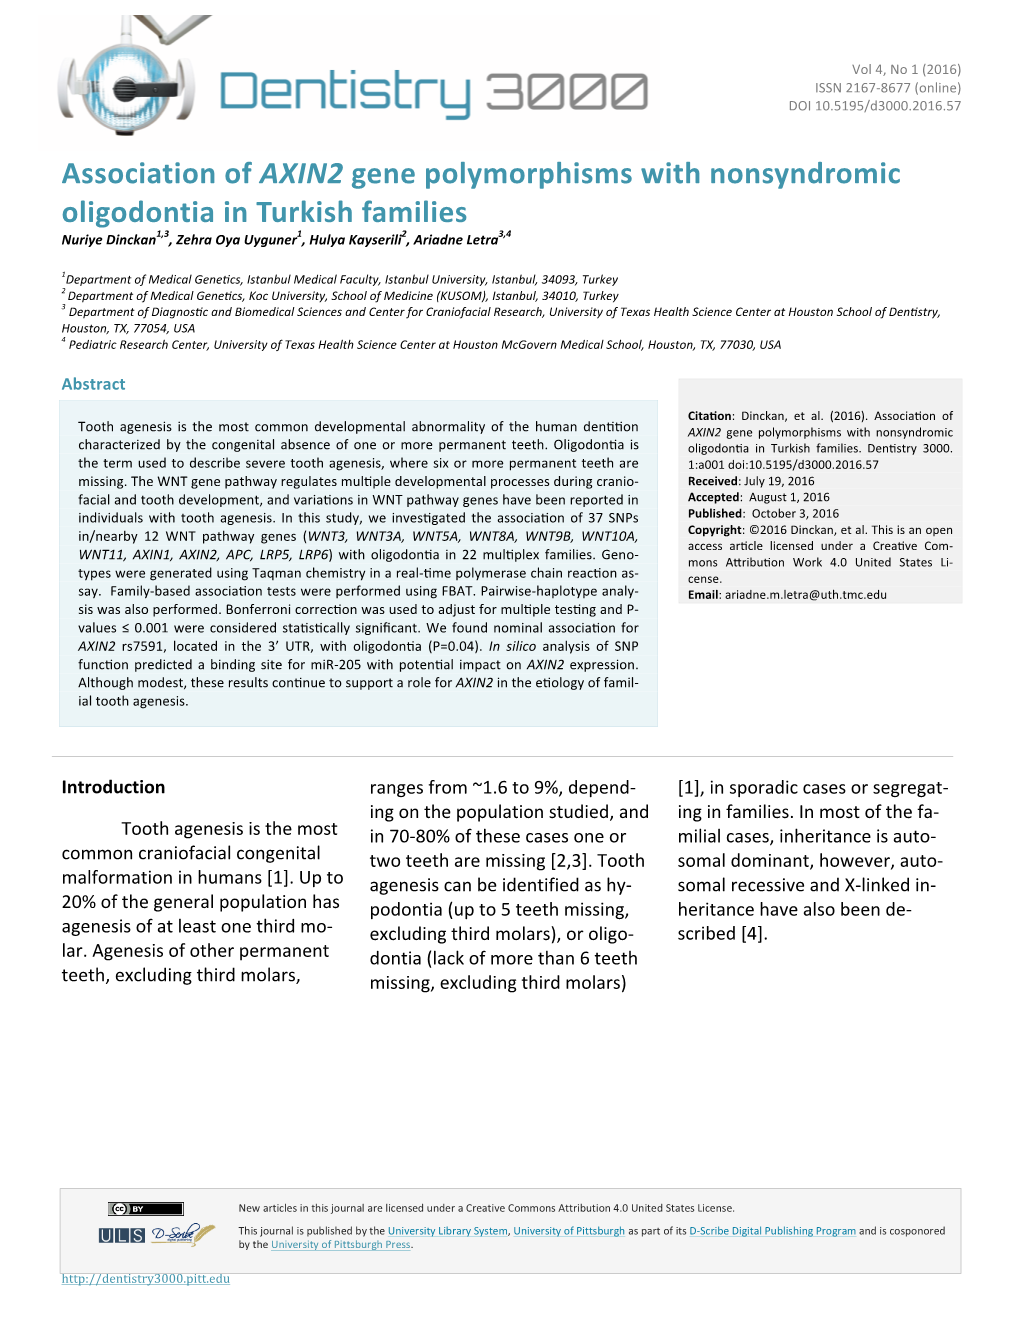 Association of AXIN2 Gene Polymorphisms with Nonsyndromic Oligodontia in Turkish Families Nuriye Dinckan1,3, Zehra Oya Uyguner1, Hulya Kayserili2, Ariadne Letra3,4